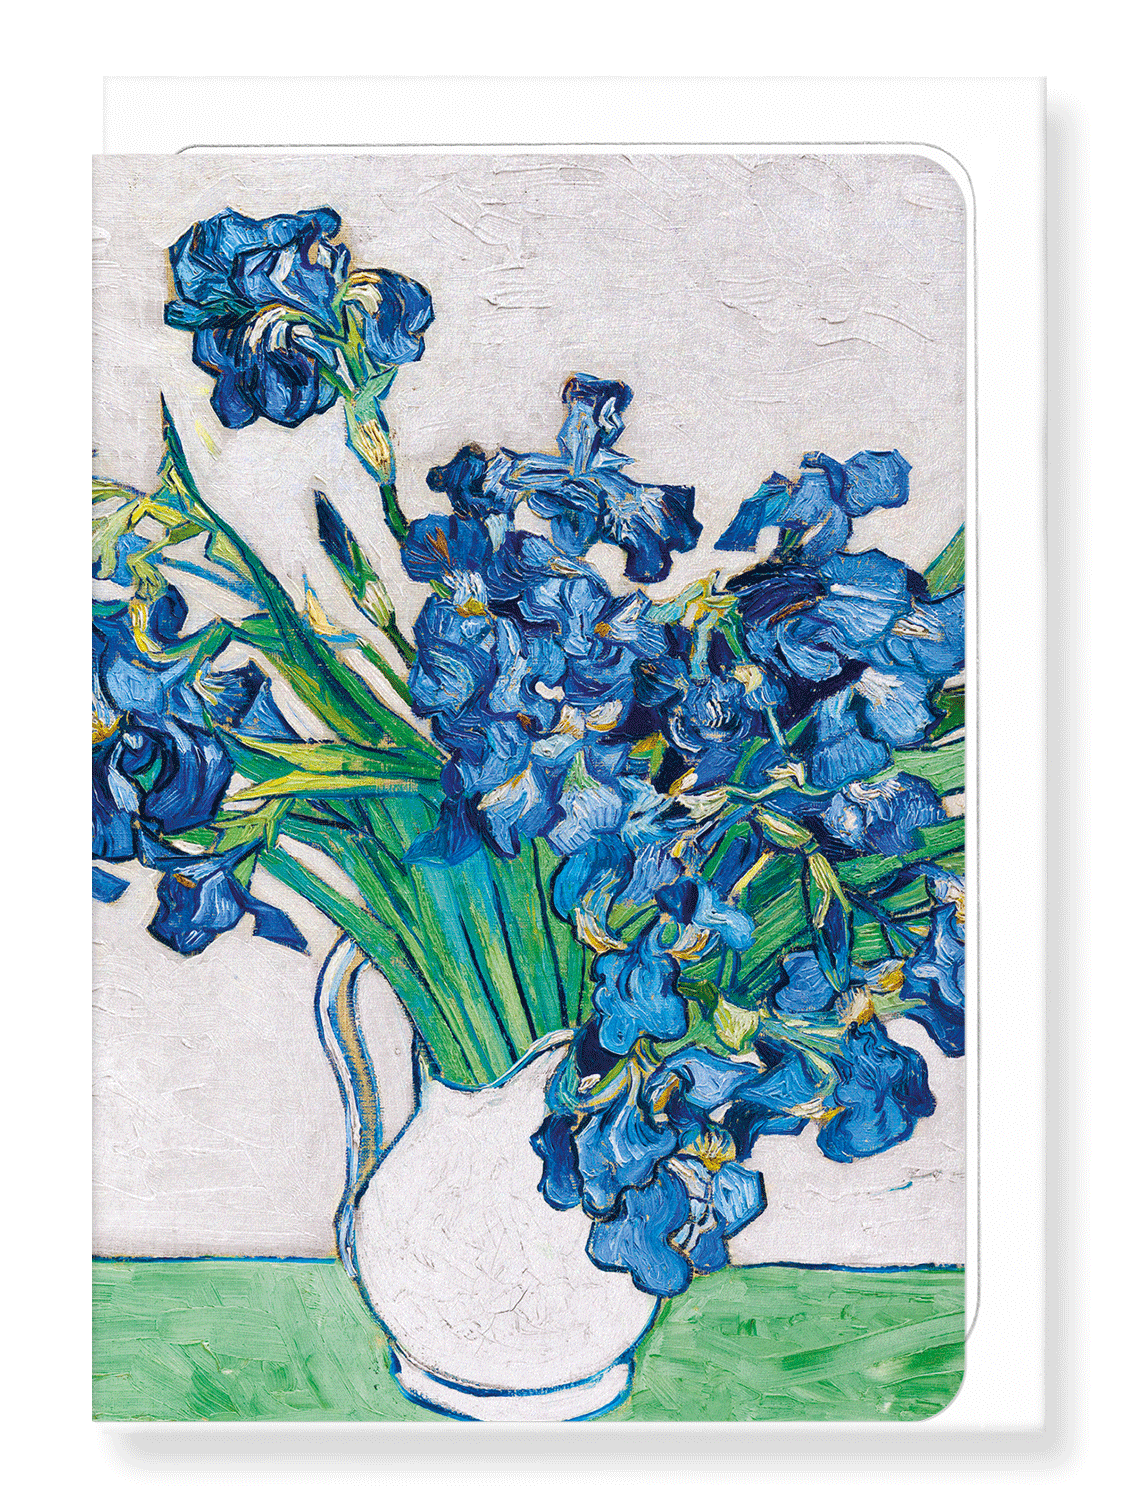 Ezen Designs - Irises (1890) by van gogh - Greeting Card - Front